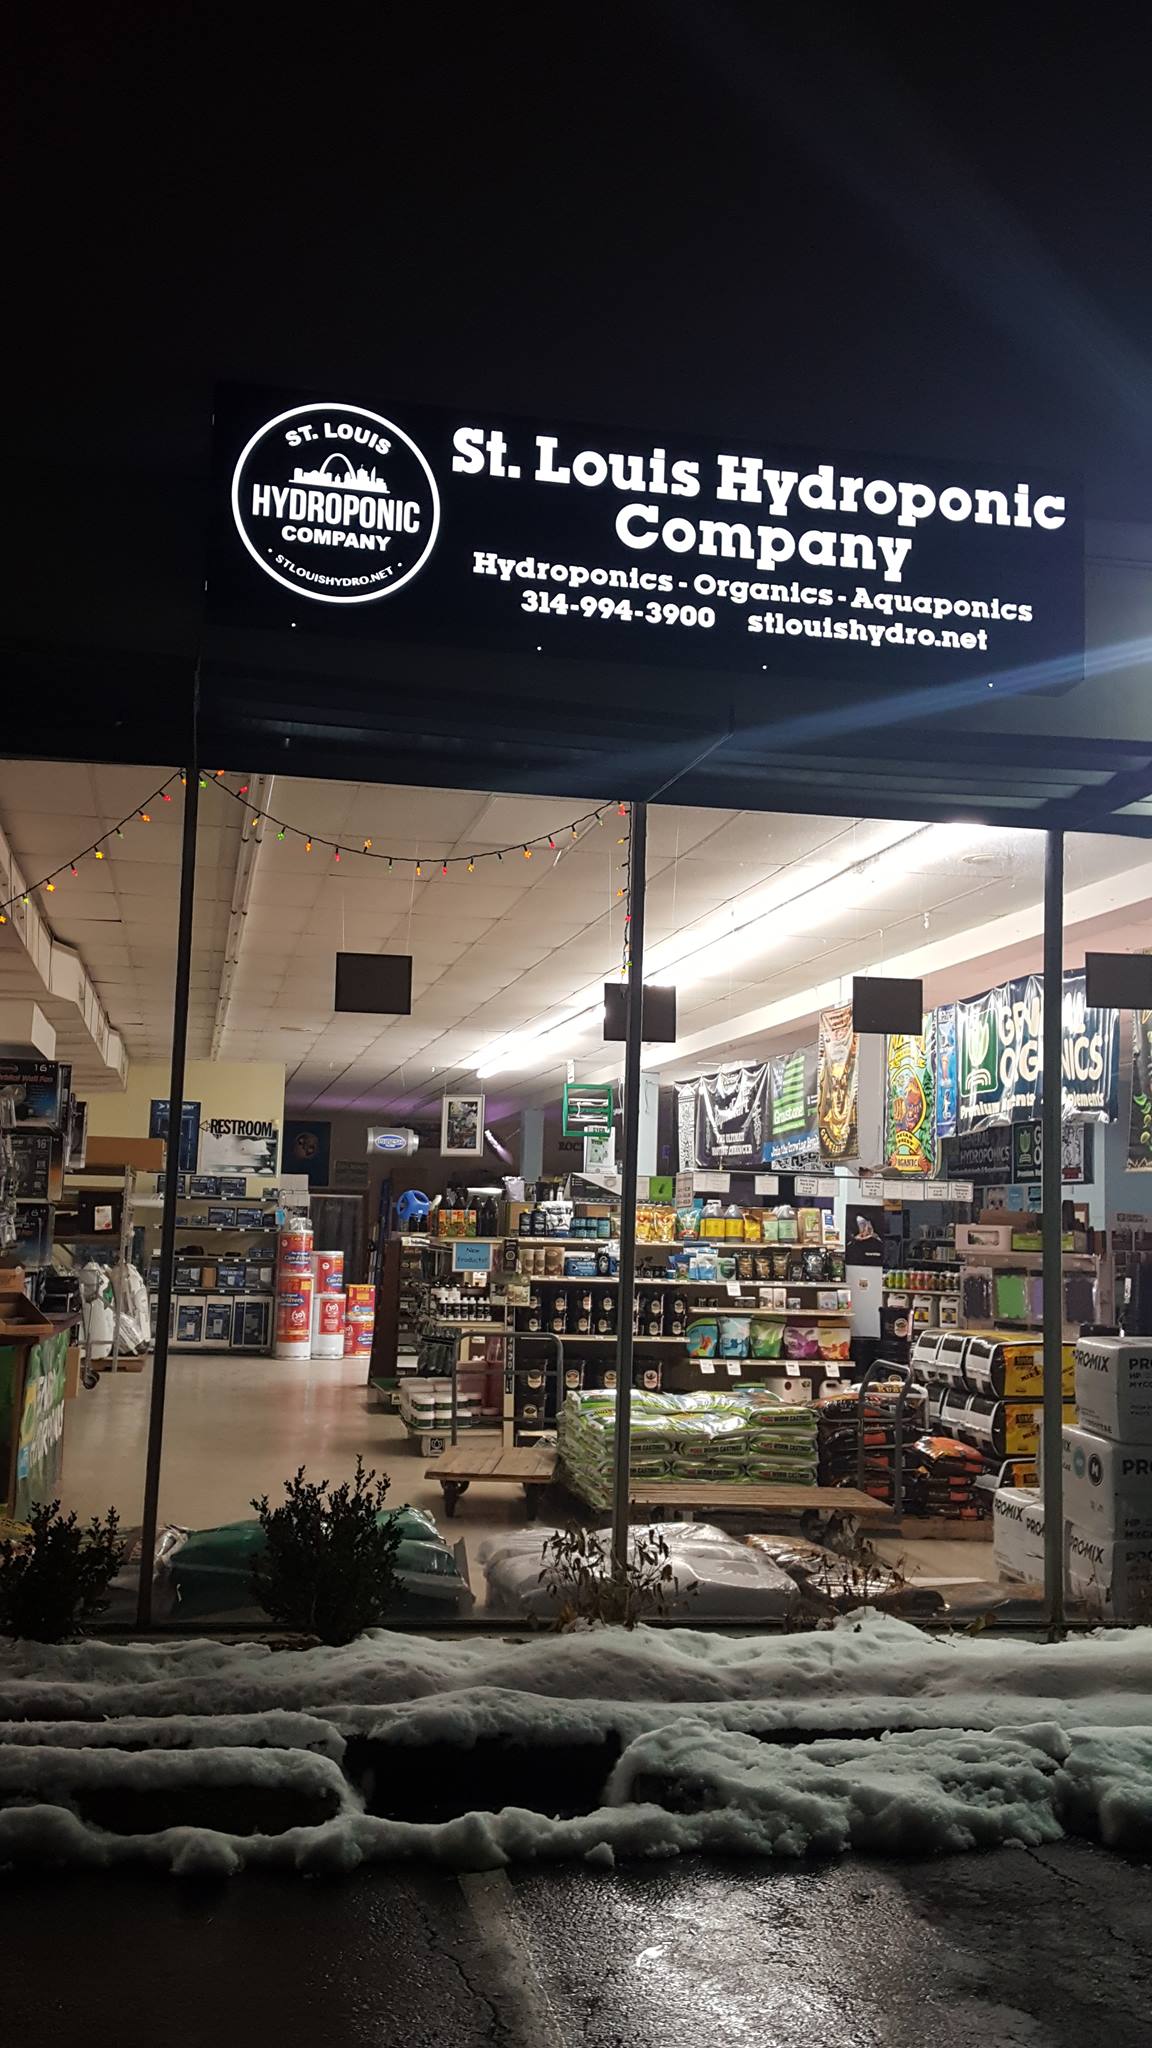 St. Louis Hydroponic Company